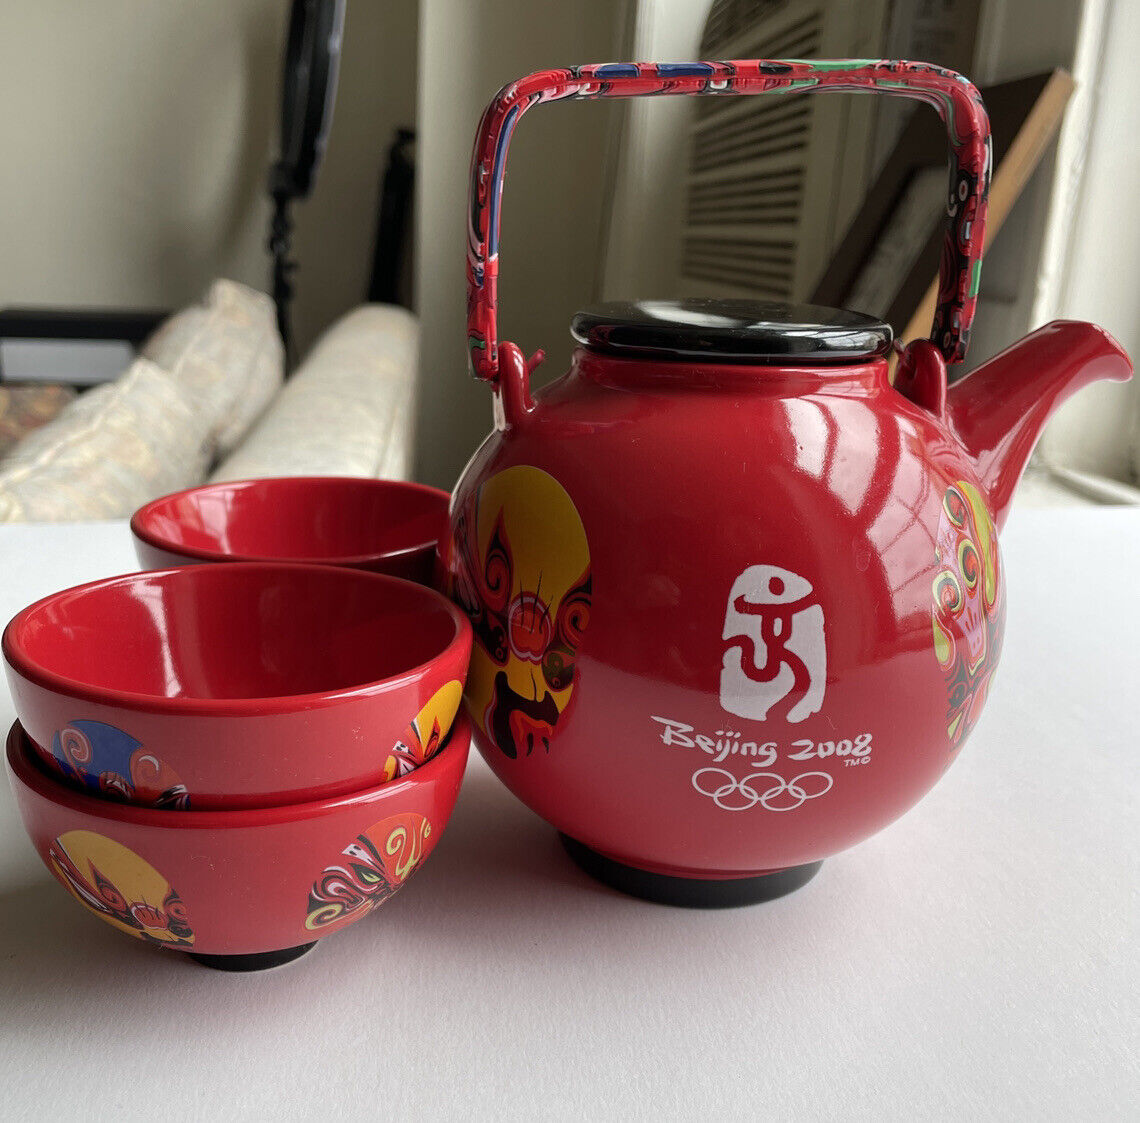 Beijing Olympics 2008 Red Tea Pot + 4 Cups Set